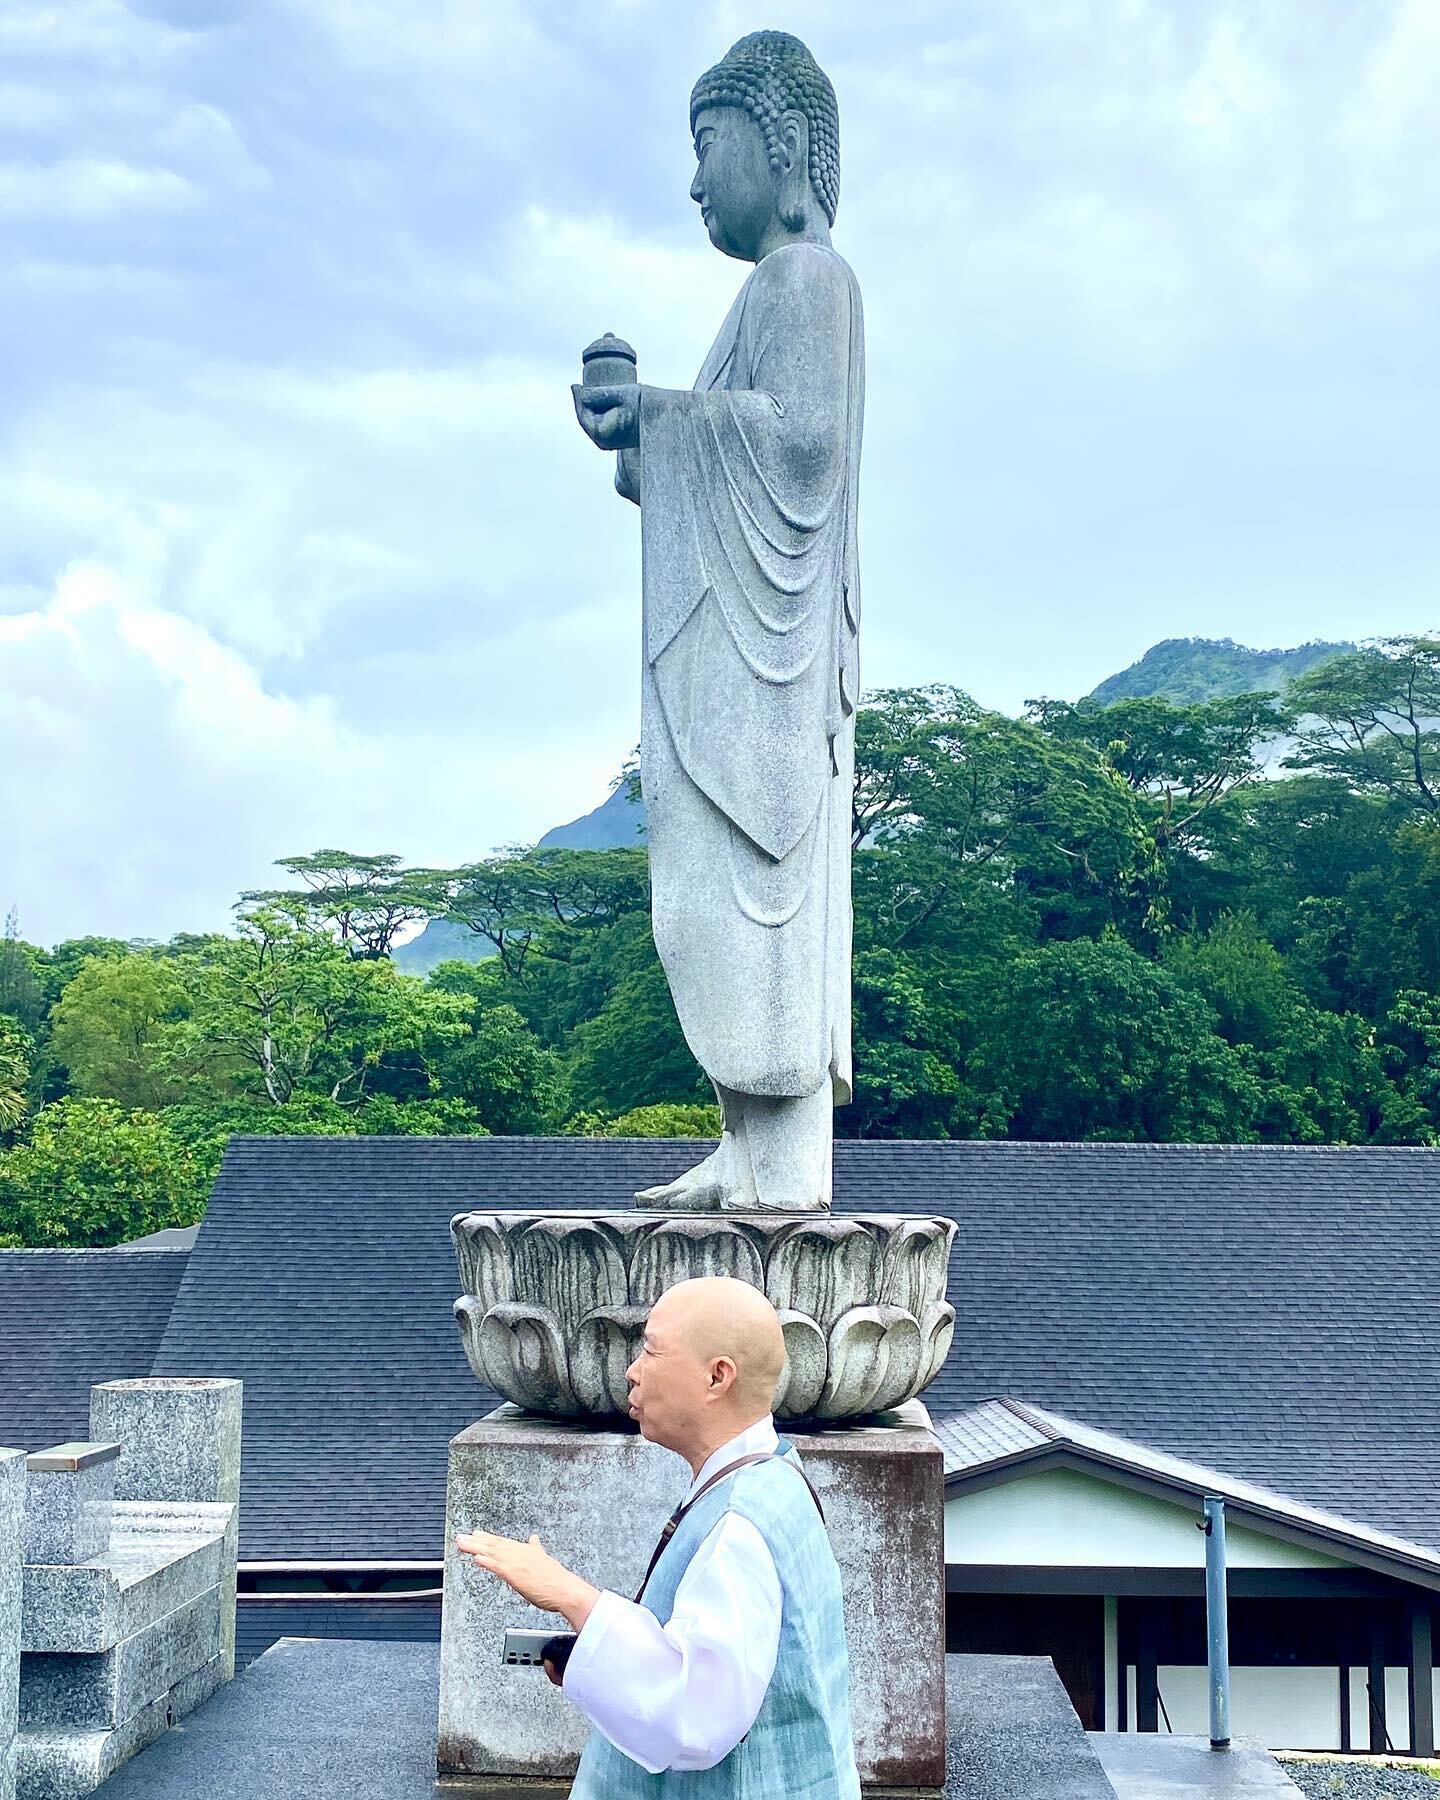 A quick visit from our good friend Jeong Kwan Sunim. Great to have her at Chozen-ji again!
.
.
.
#jeongkwan #jeongkwansunim #sunim #정관스님 #koreanzen #zencooking #臨済宗 #禅寺 #超禅寺 #禅 #zenbuddhism #buddhism #rinzaizen #rinzai #hawaiizen #zentemple #z